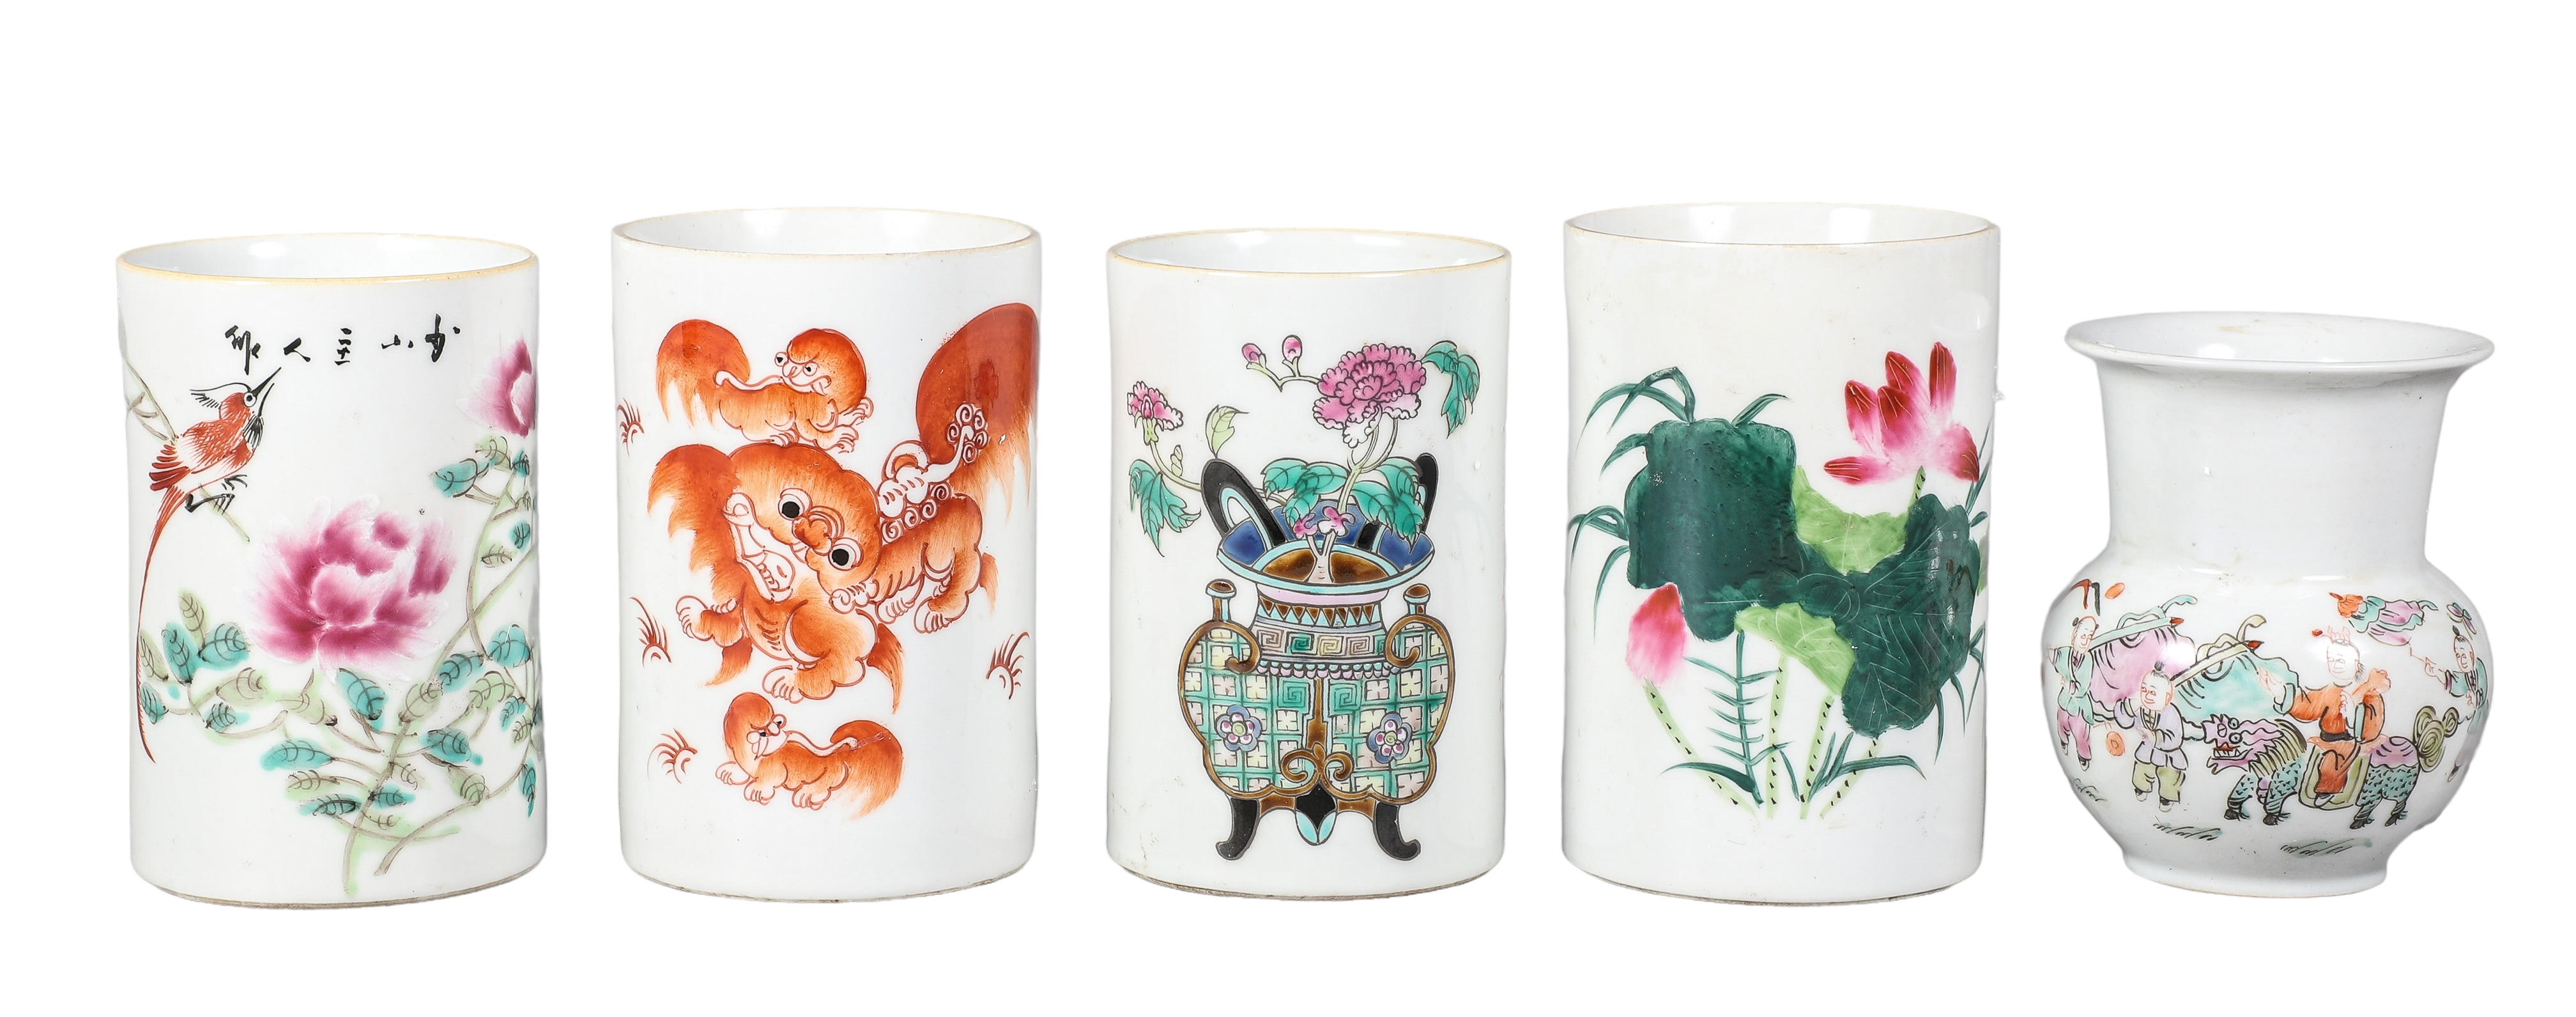  5 Chinese porcelain vases various 2e1f48